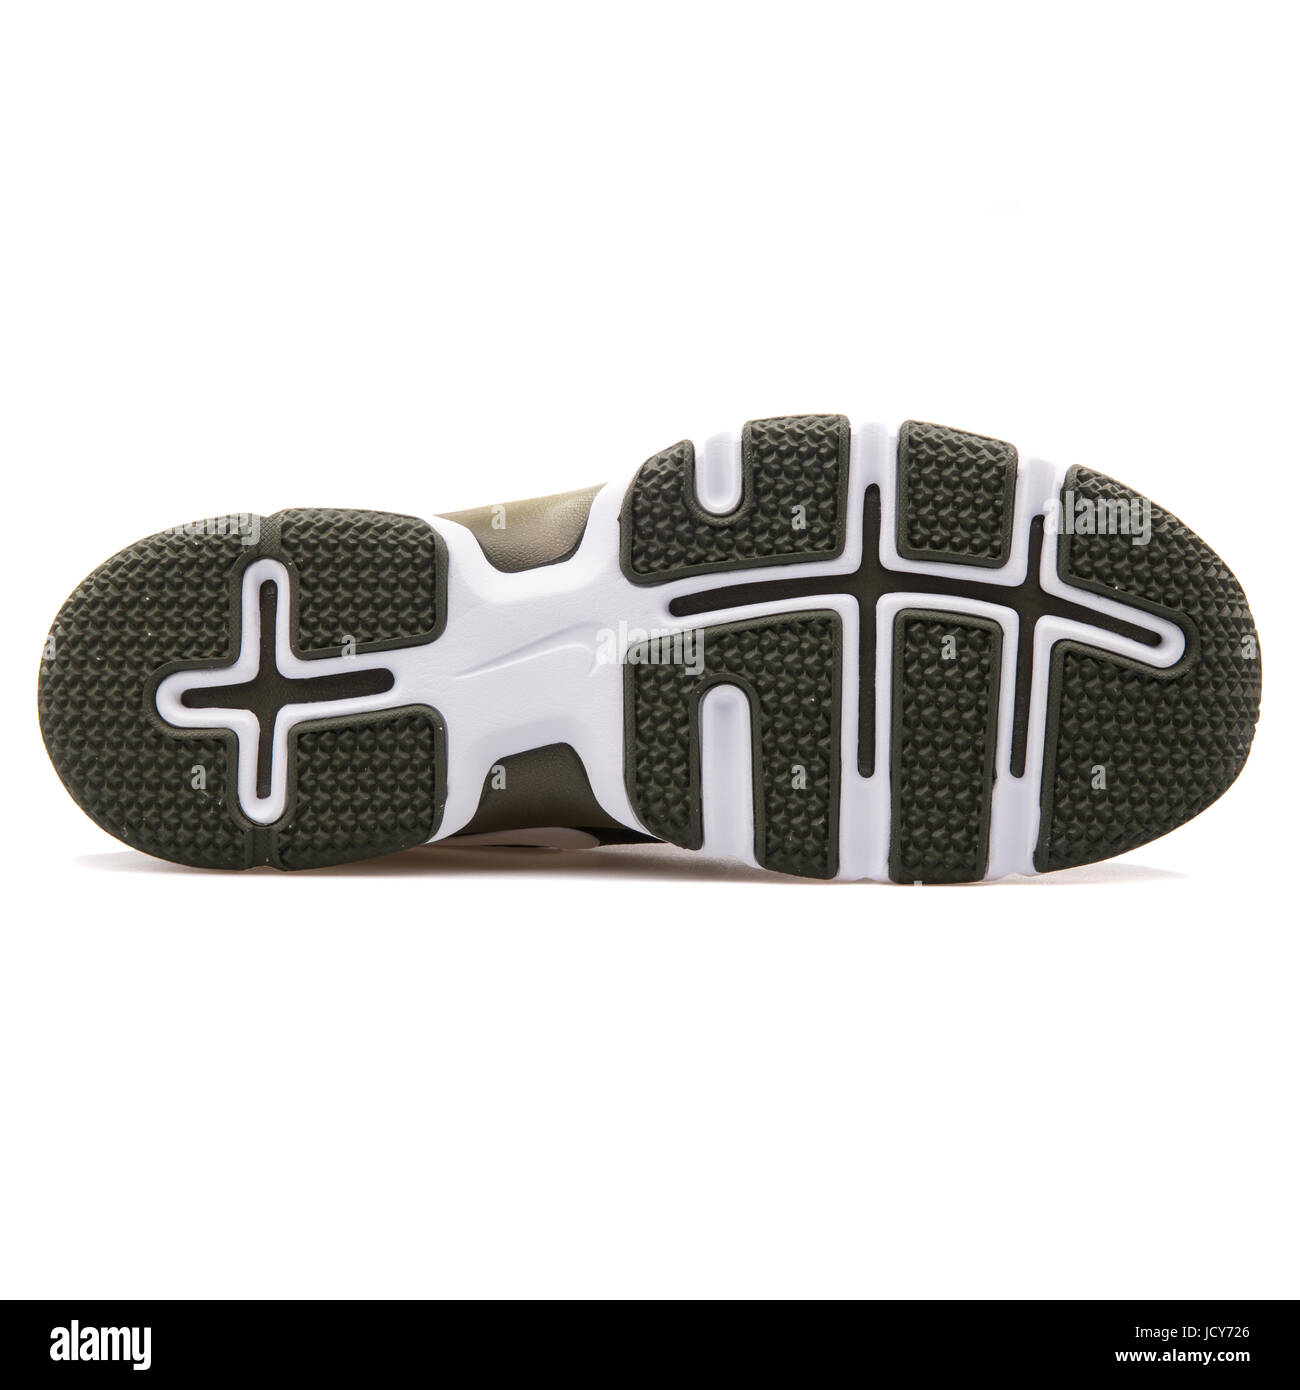 Oceano Espesar escala Nike Dual Fusion TR 6 Black and Khaki Men's Running Shoes - 704889-013  Stock Photo - Alamy